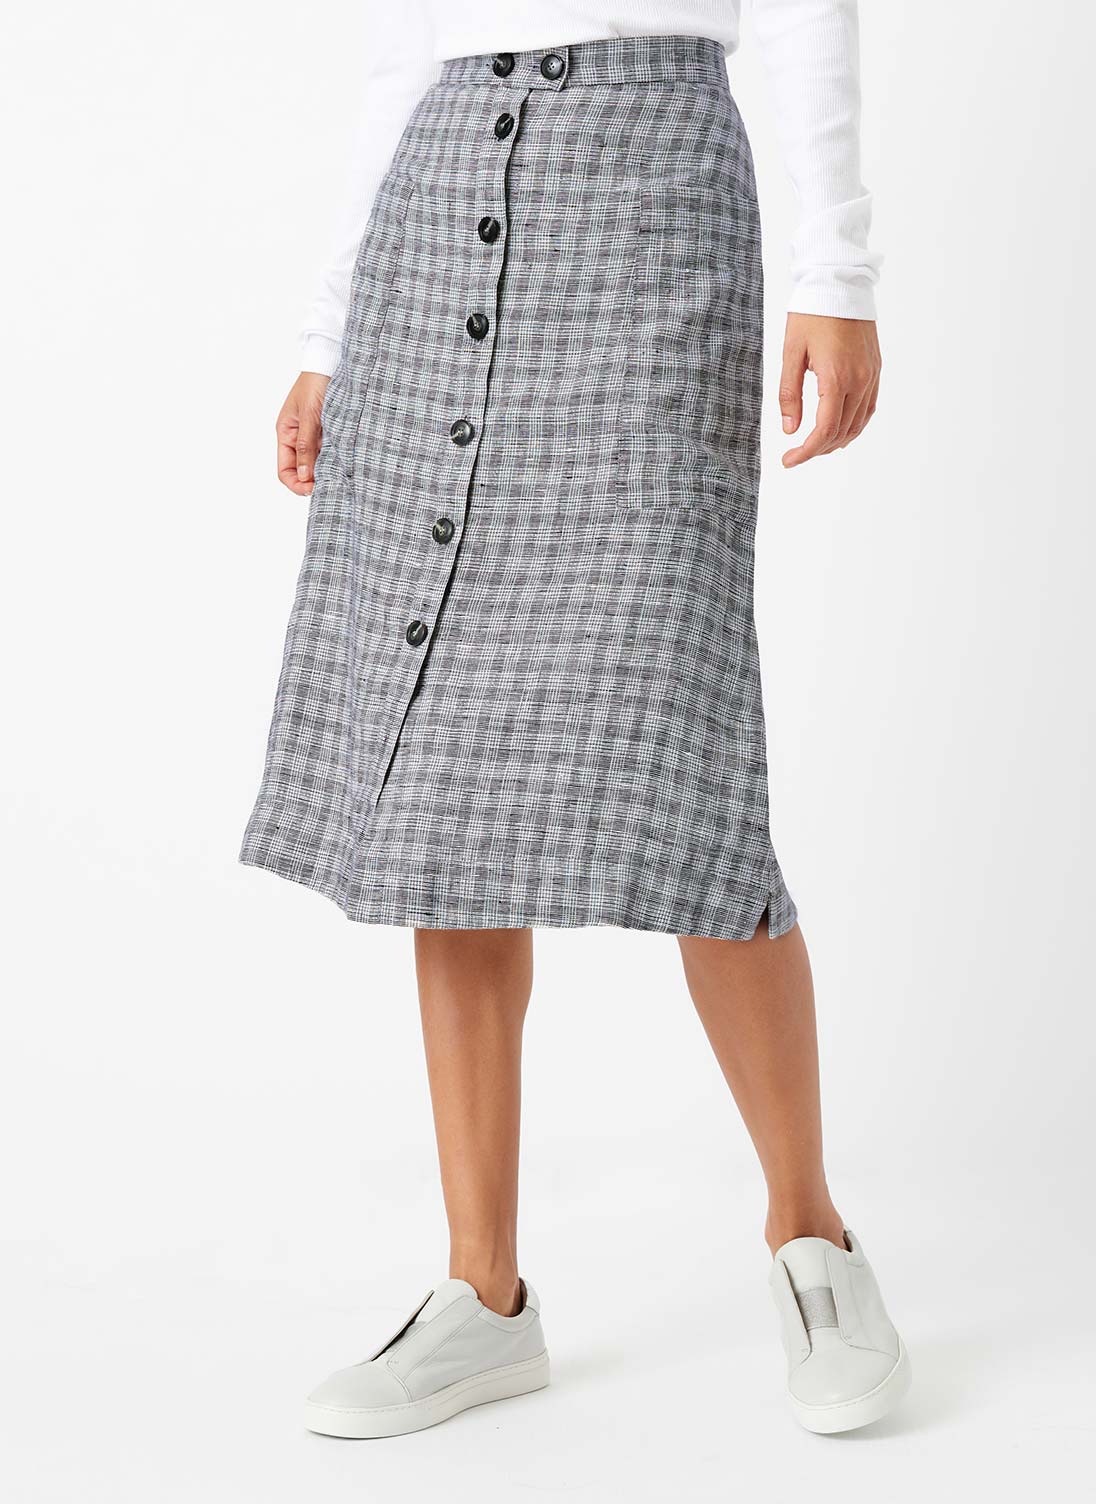 Monochrome Check Linen Skirt Swan & carbon